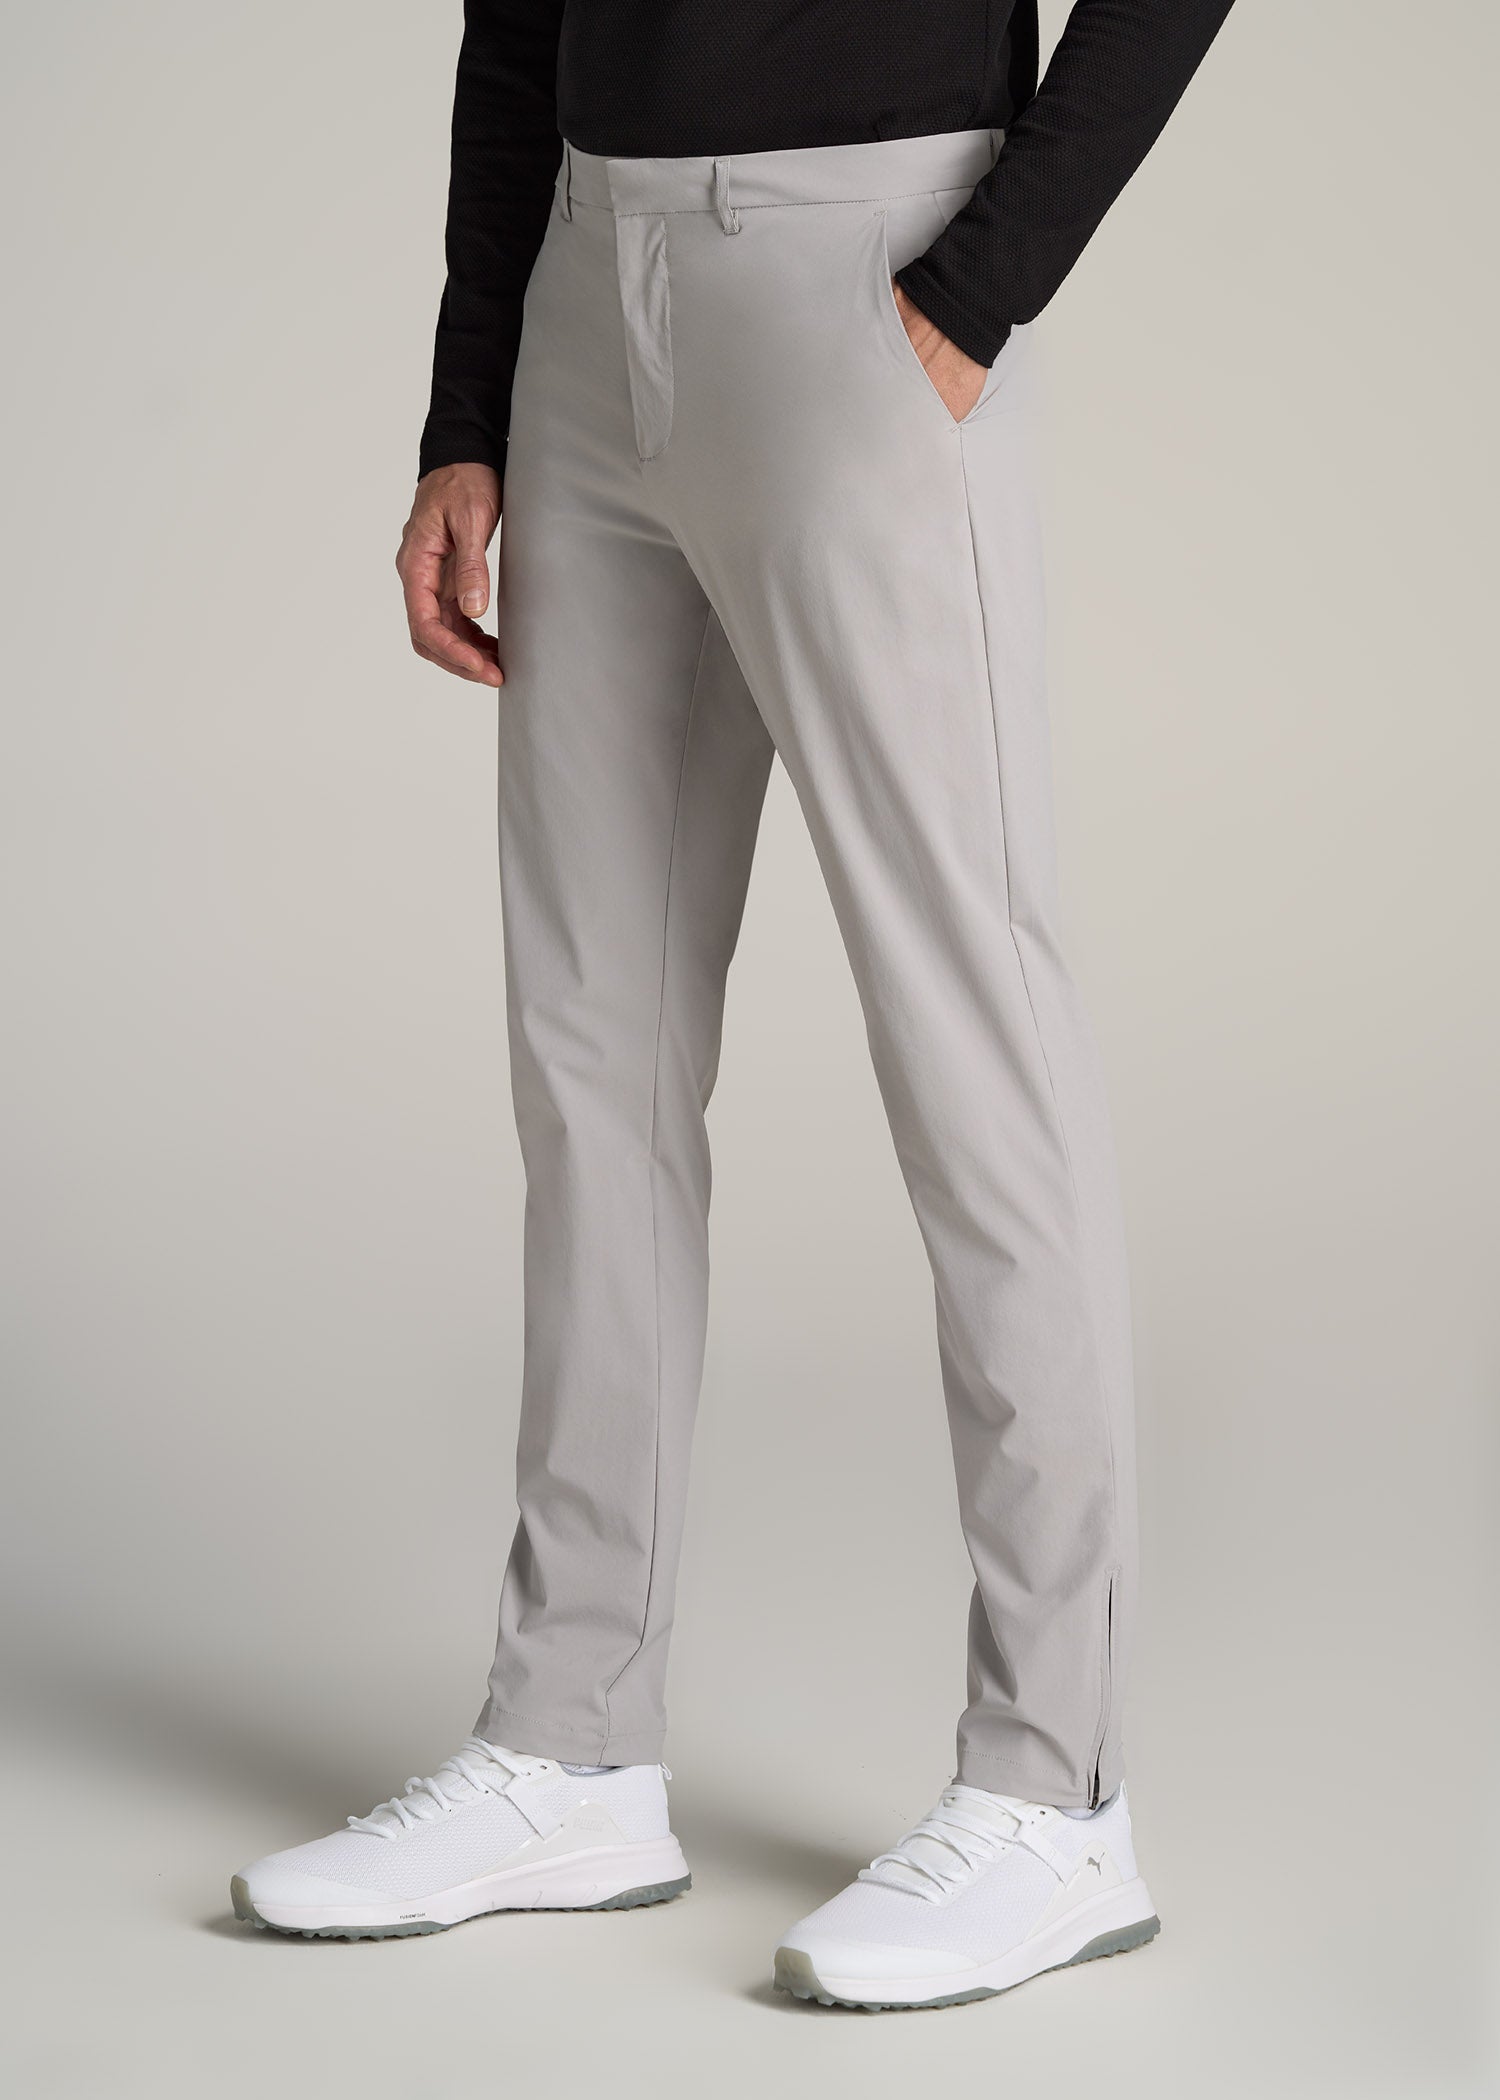 Haggar Men's Big & Tall Premium No Iron Classic Fit Flat Front Casual Pants  - British Khaki 50x30 : Target